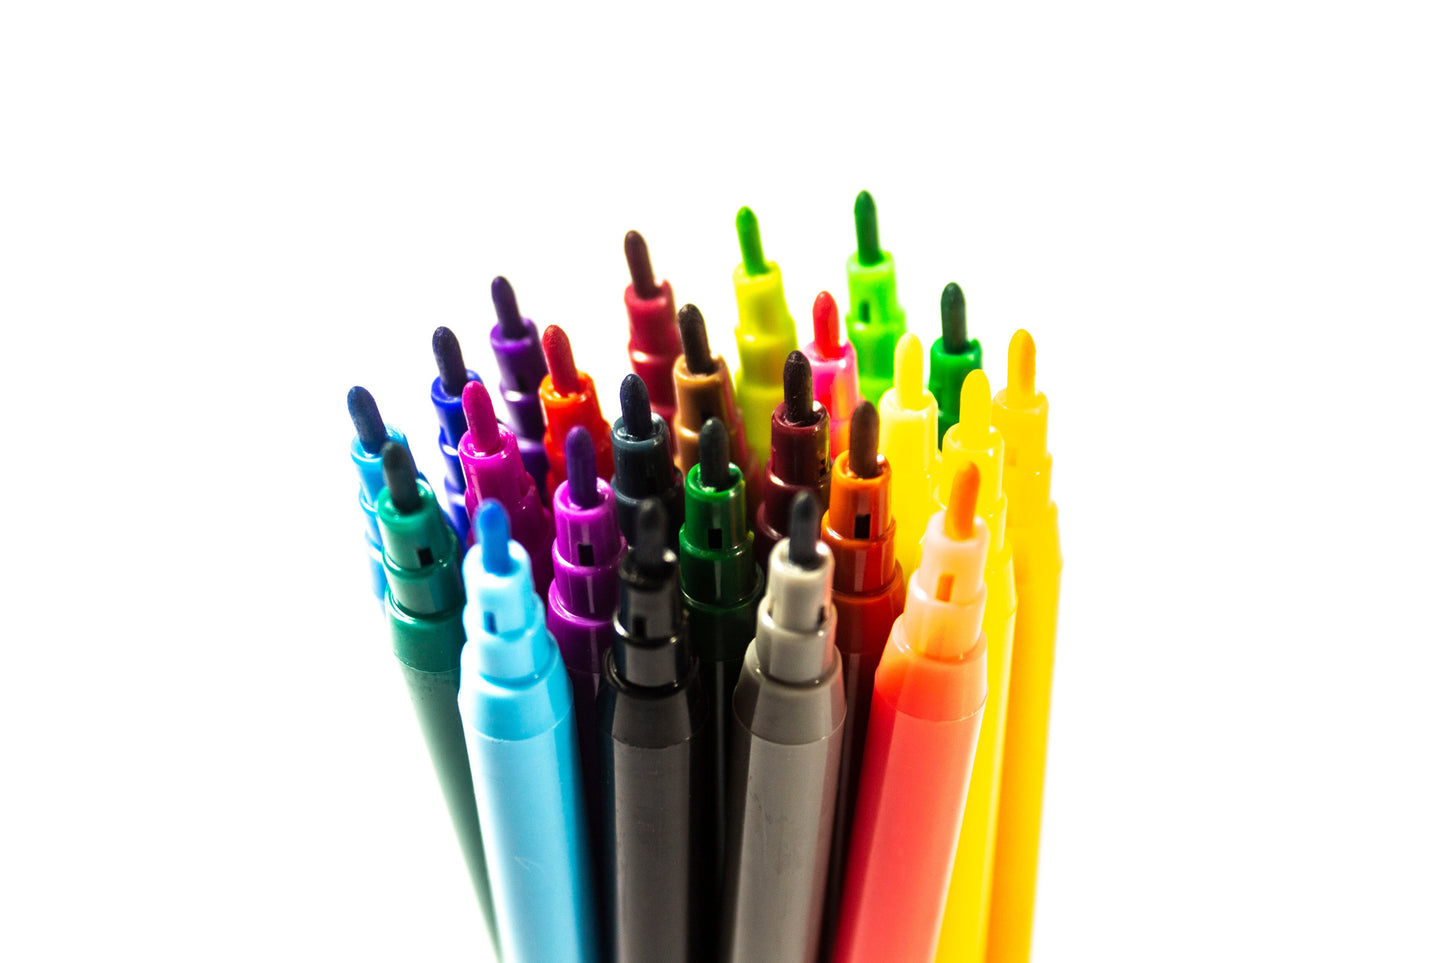 Kidart Colored Pens 24 Color 12Set